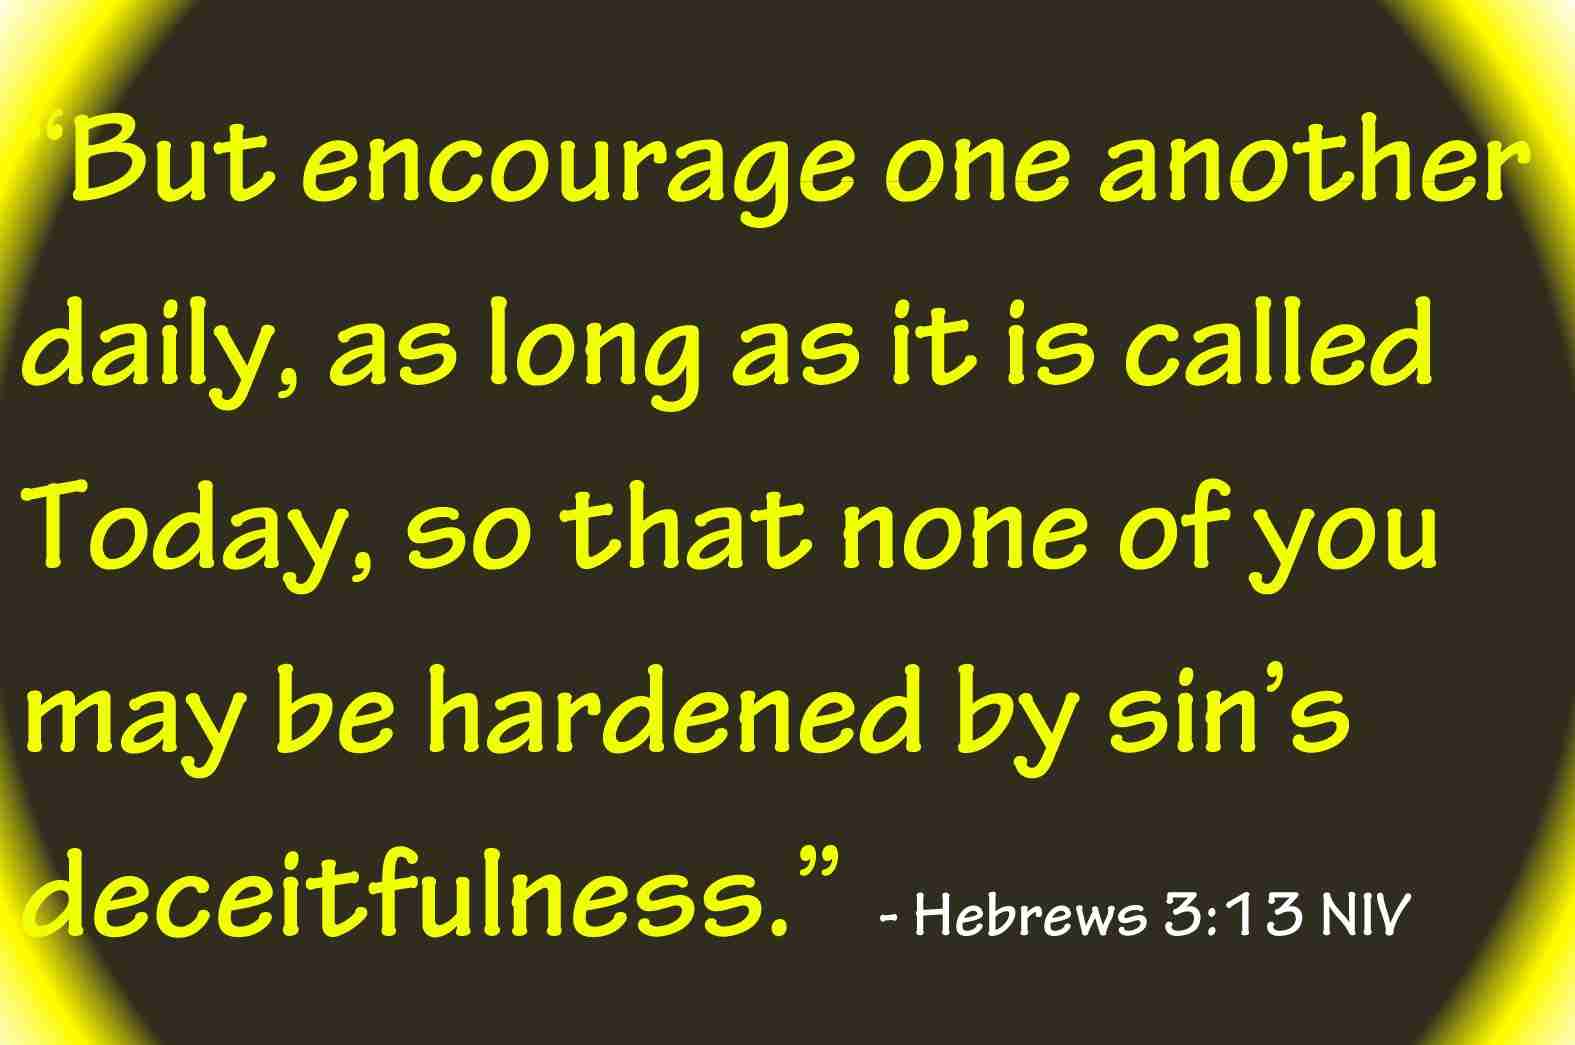 Christian Fellowship Quotes: 22 Edifying Quotes